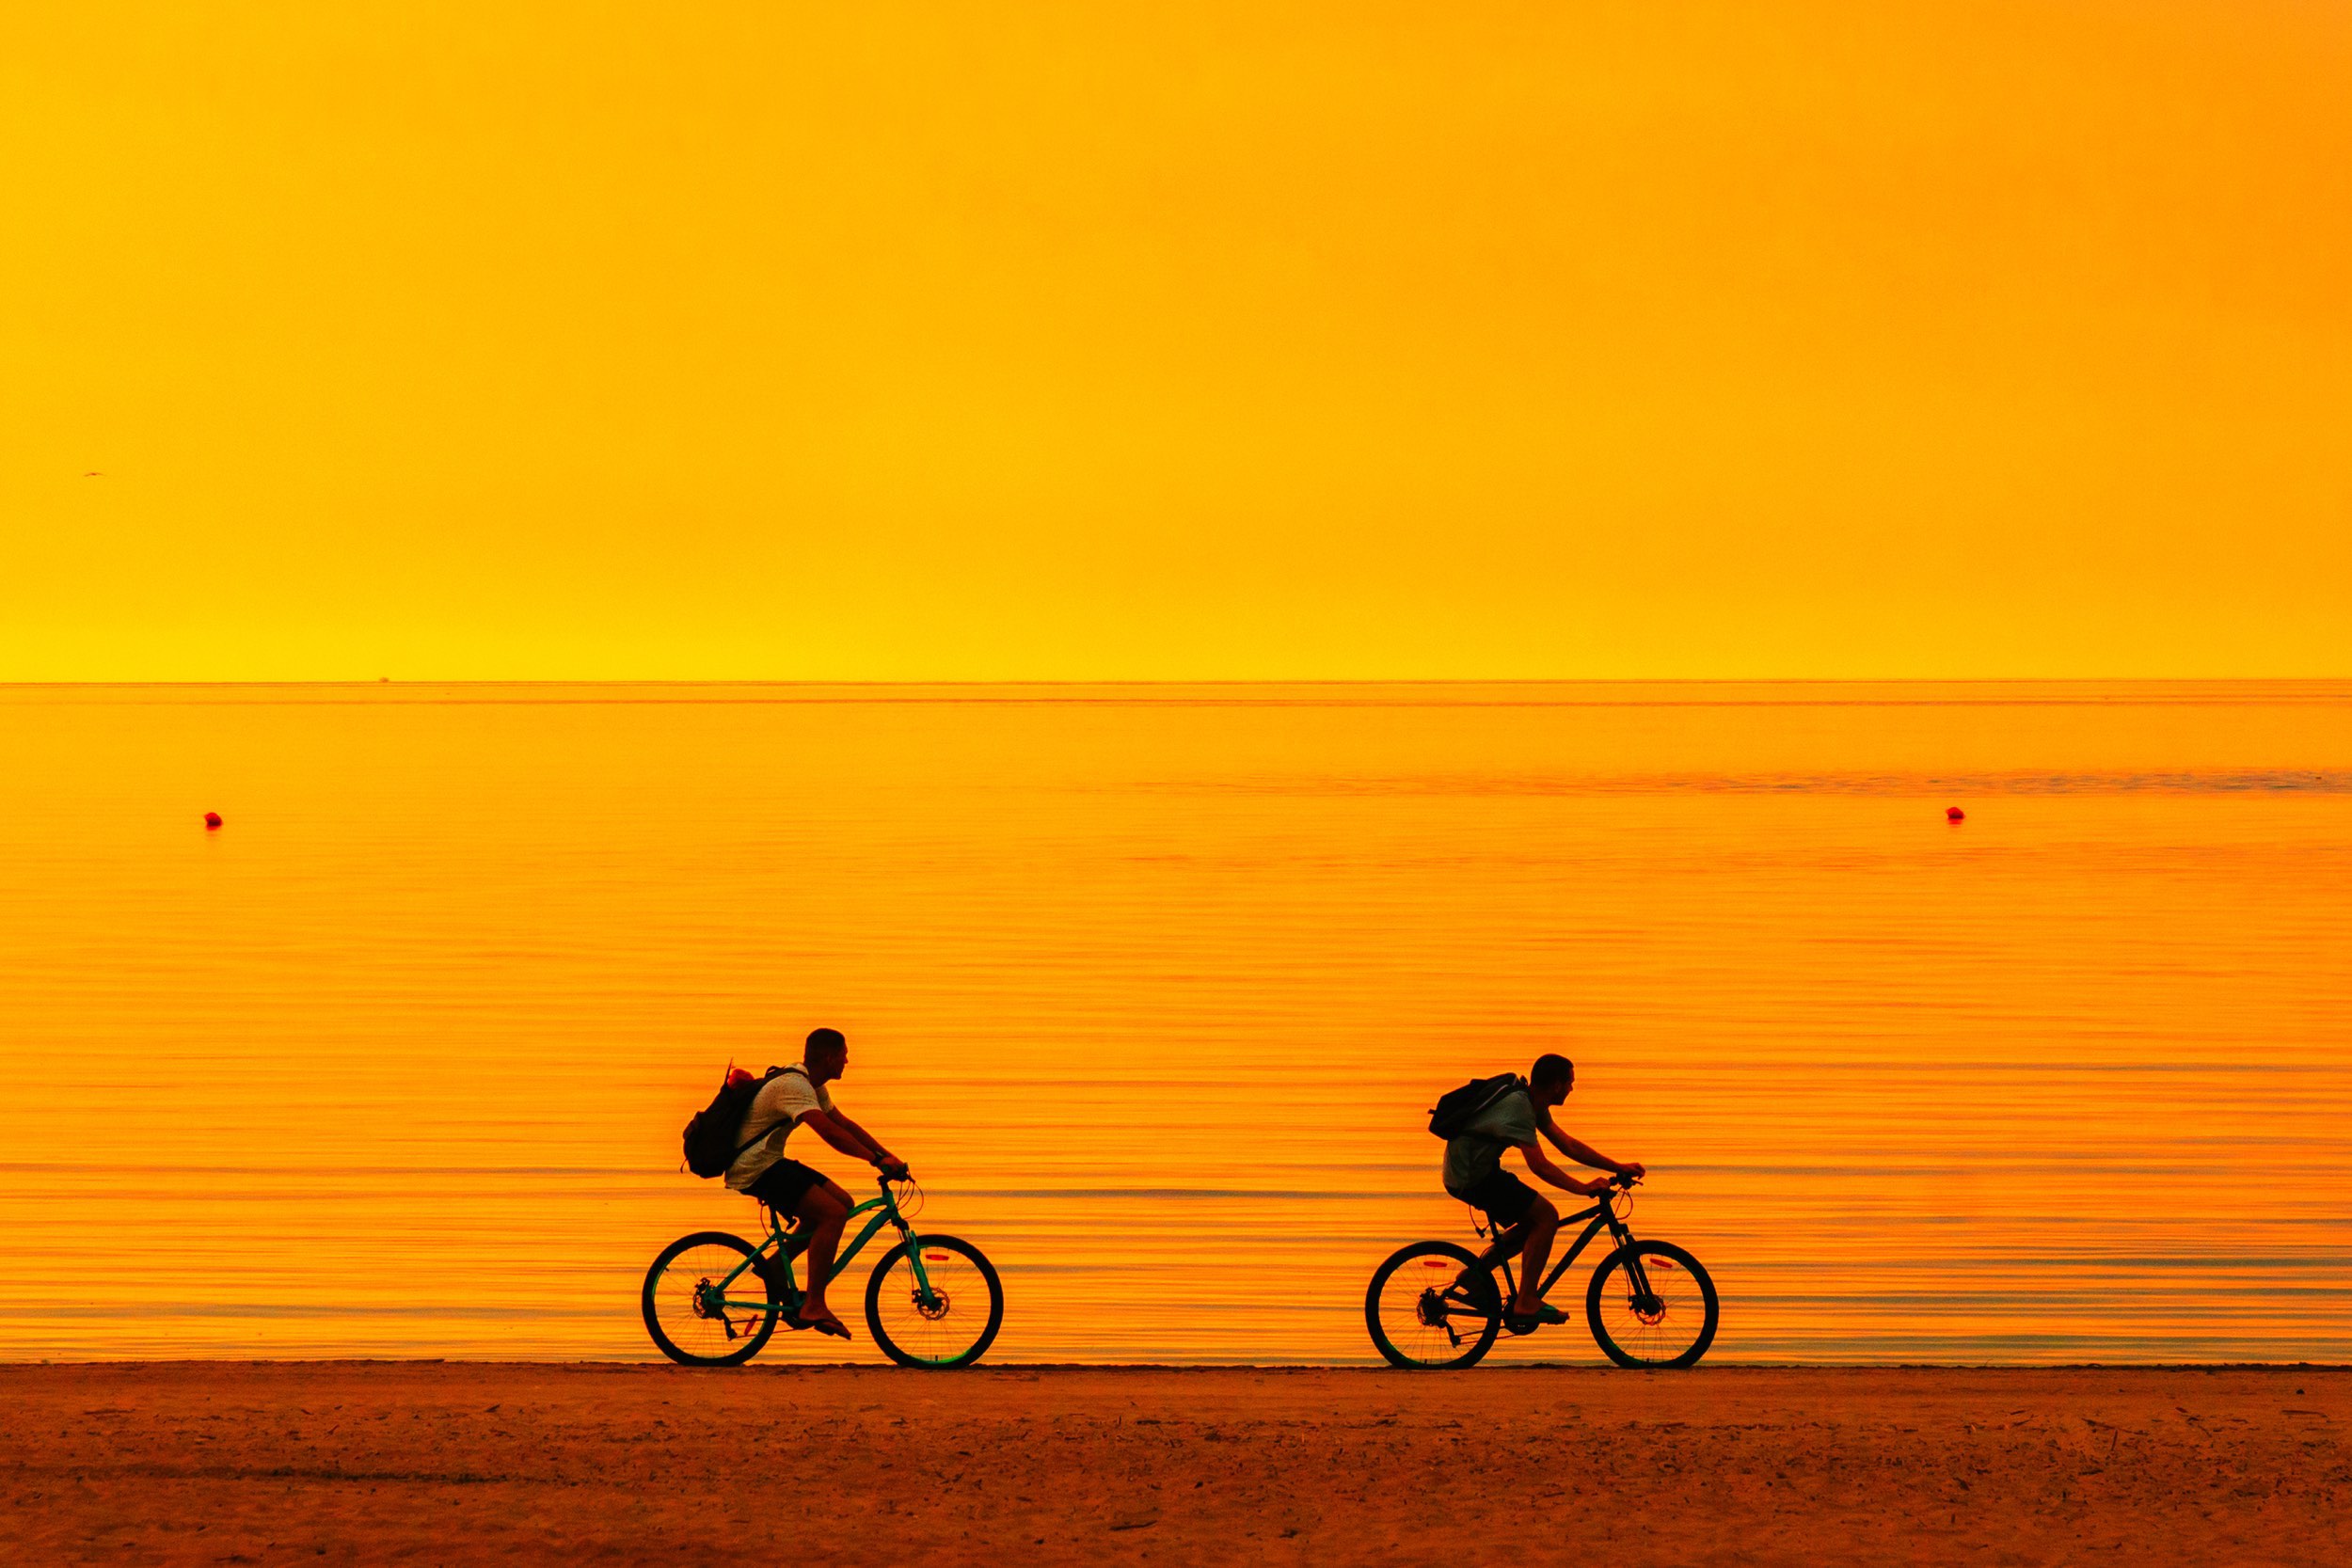 Langkawi Bicycle Tour with sunset